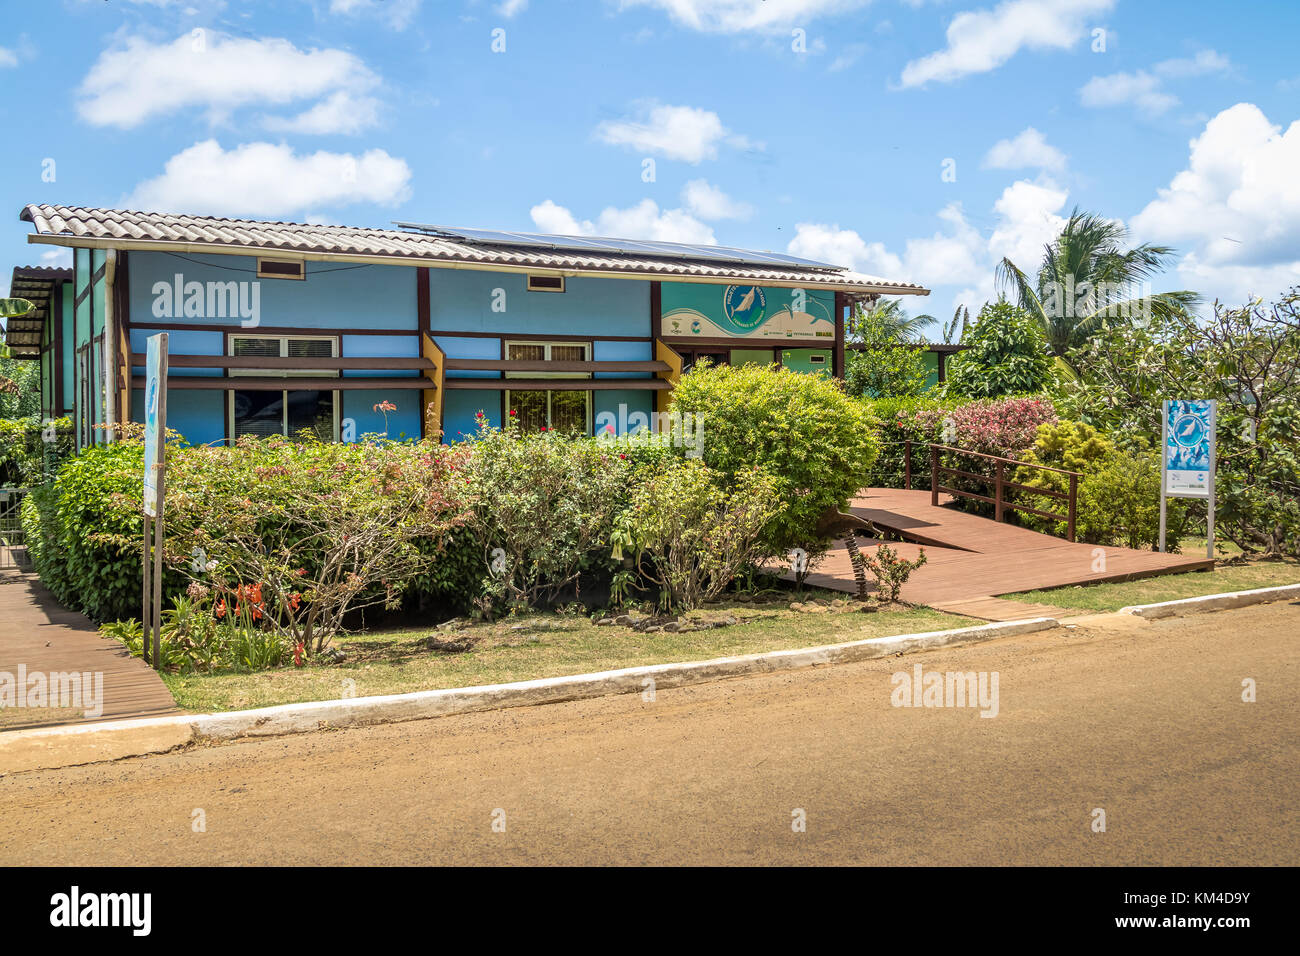 Golfinho Rotador (Spinner Dolphin) Project Headquarters at Boldro Village - Fernando de Noronha, Pernambuco, Brazil Stock Photo